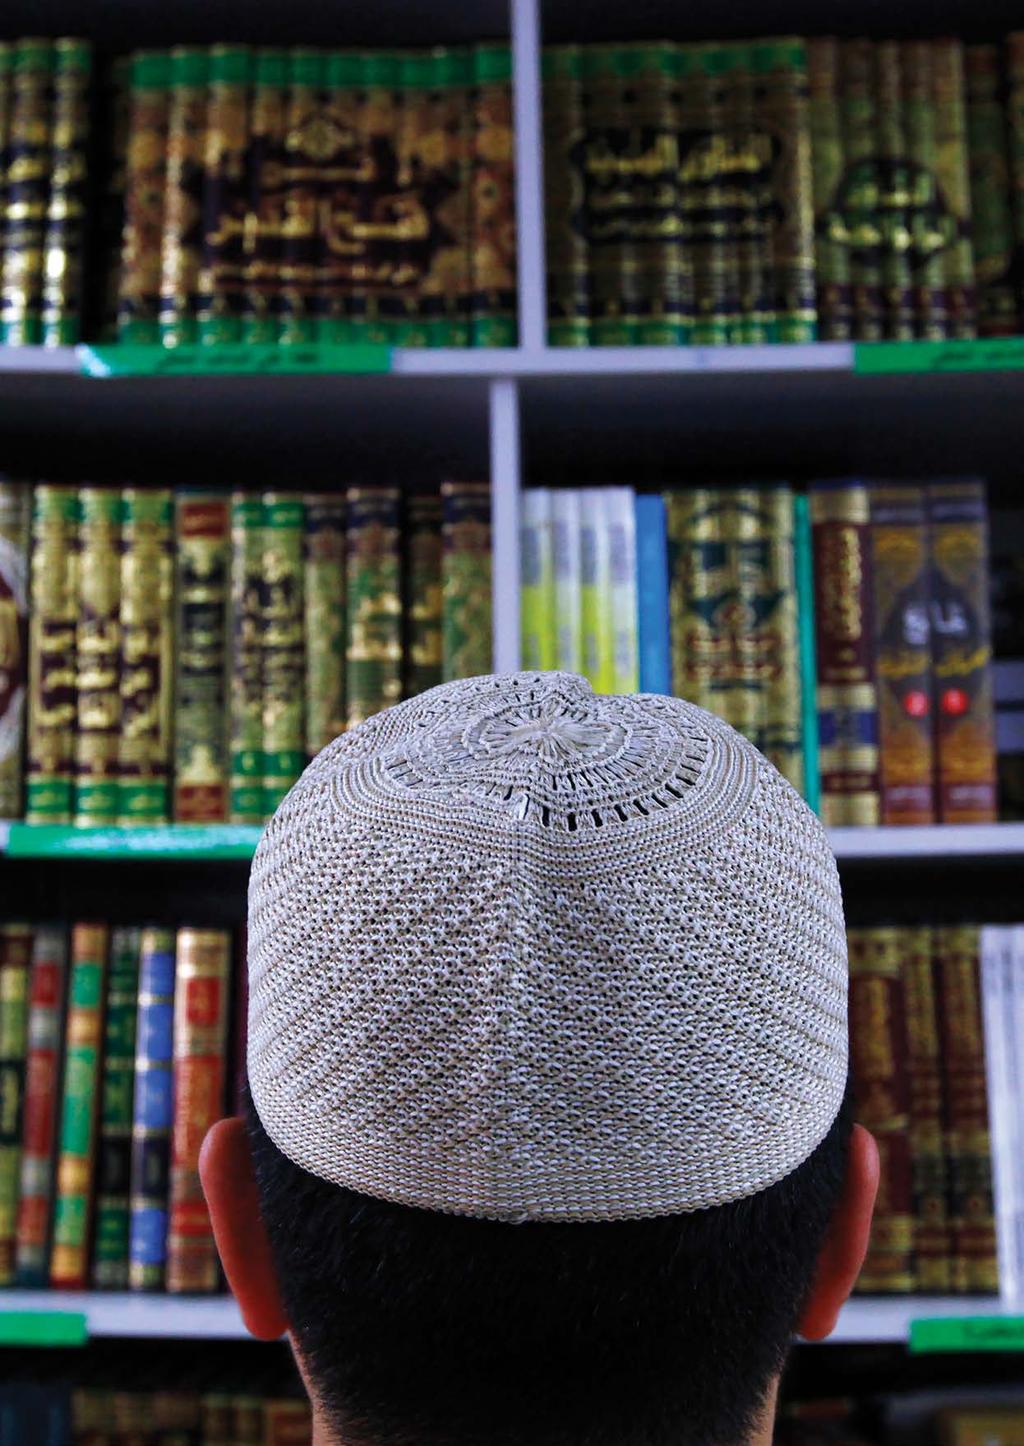 A man wearing an Islamic prayer cap, or Kufi, looks at Islamic books on display at a